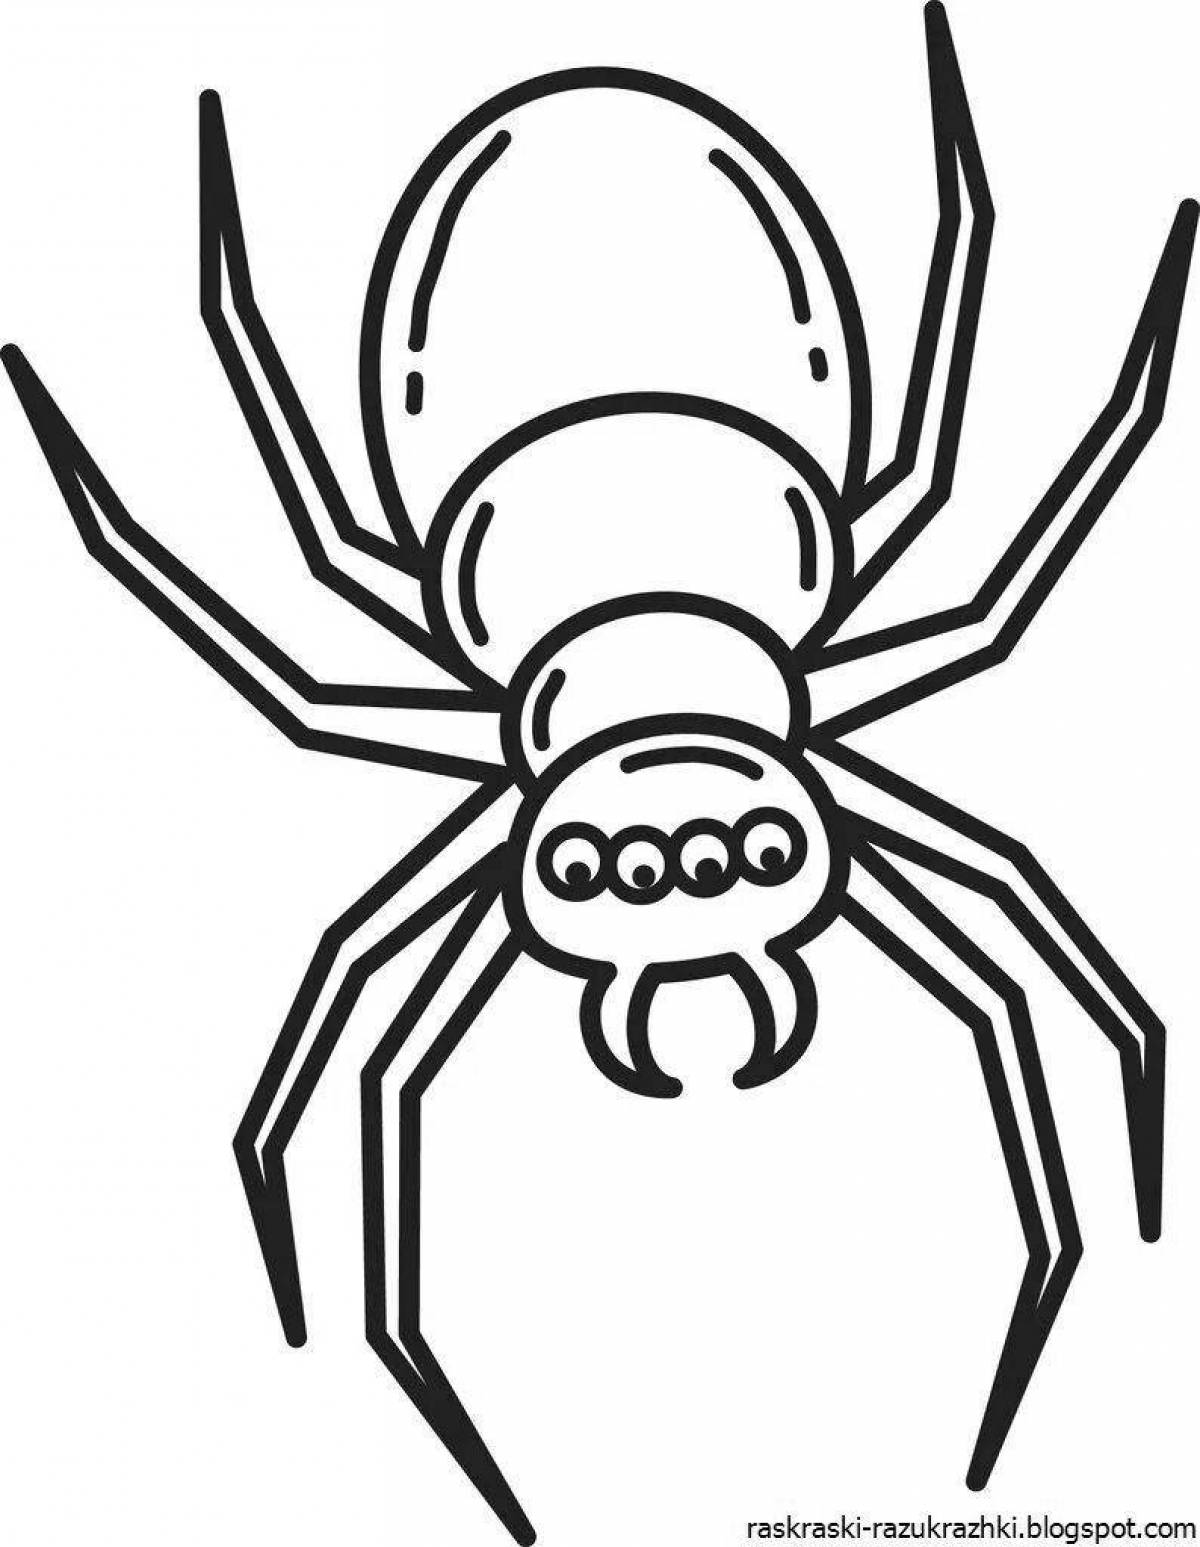 Creative sketch of a spider